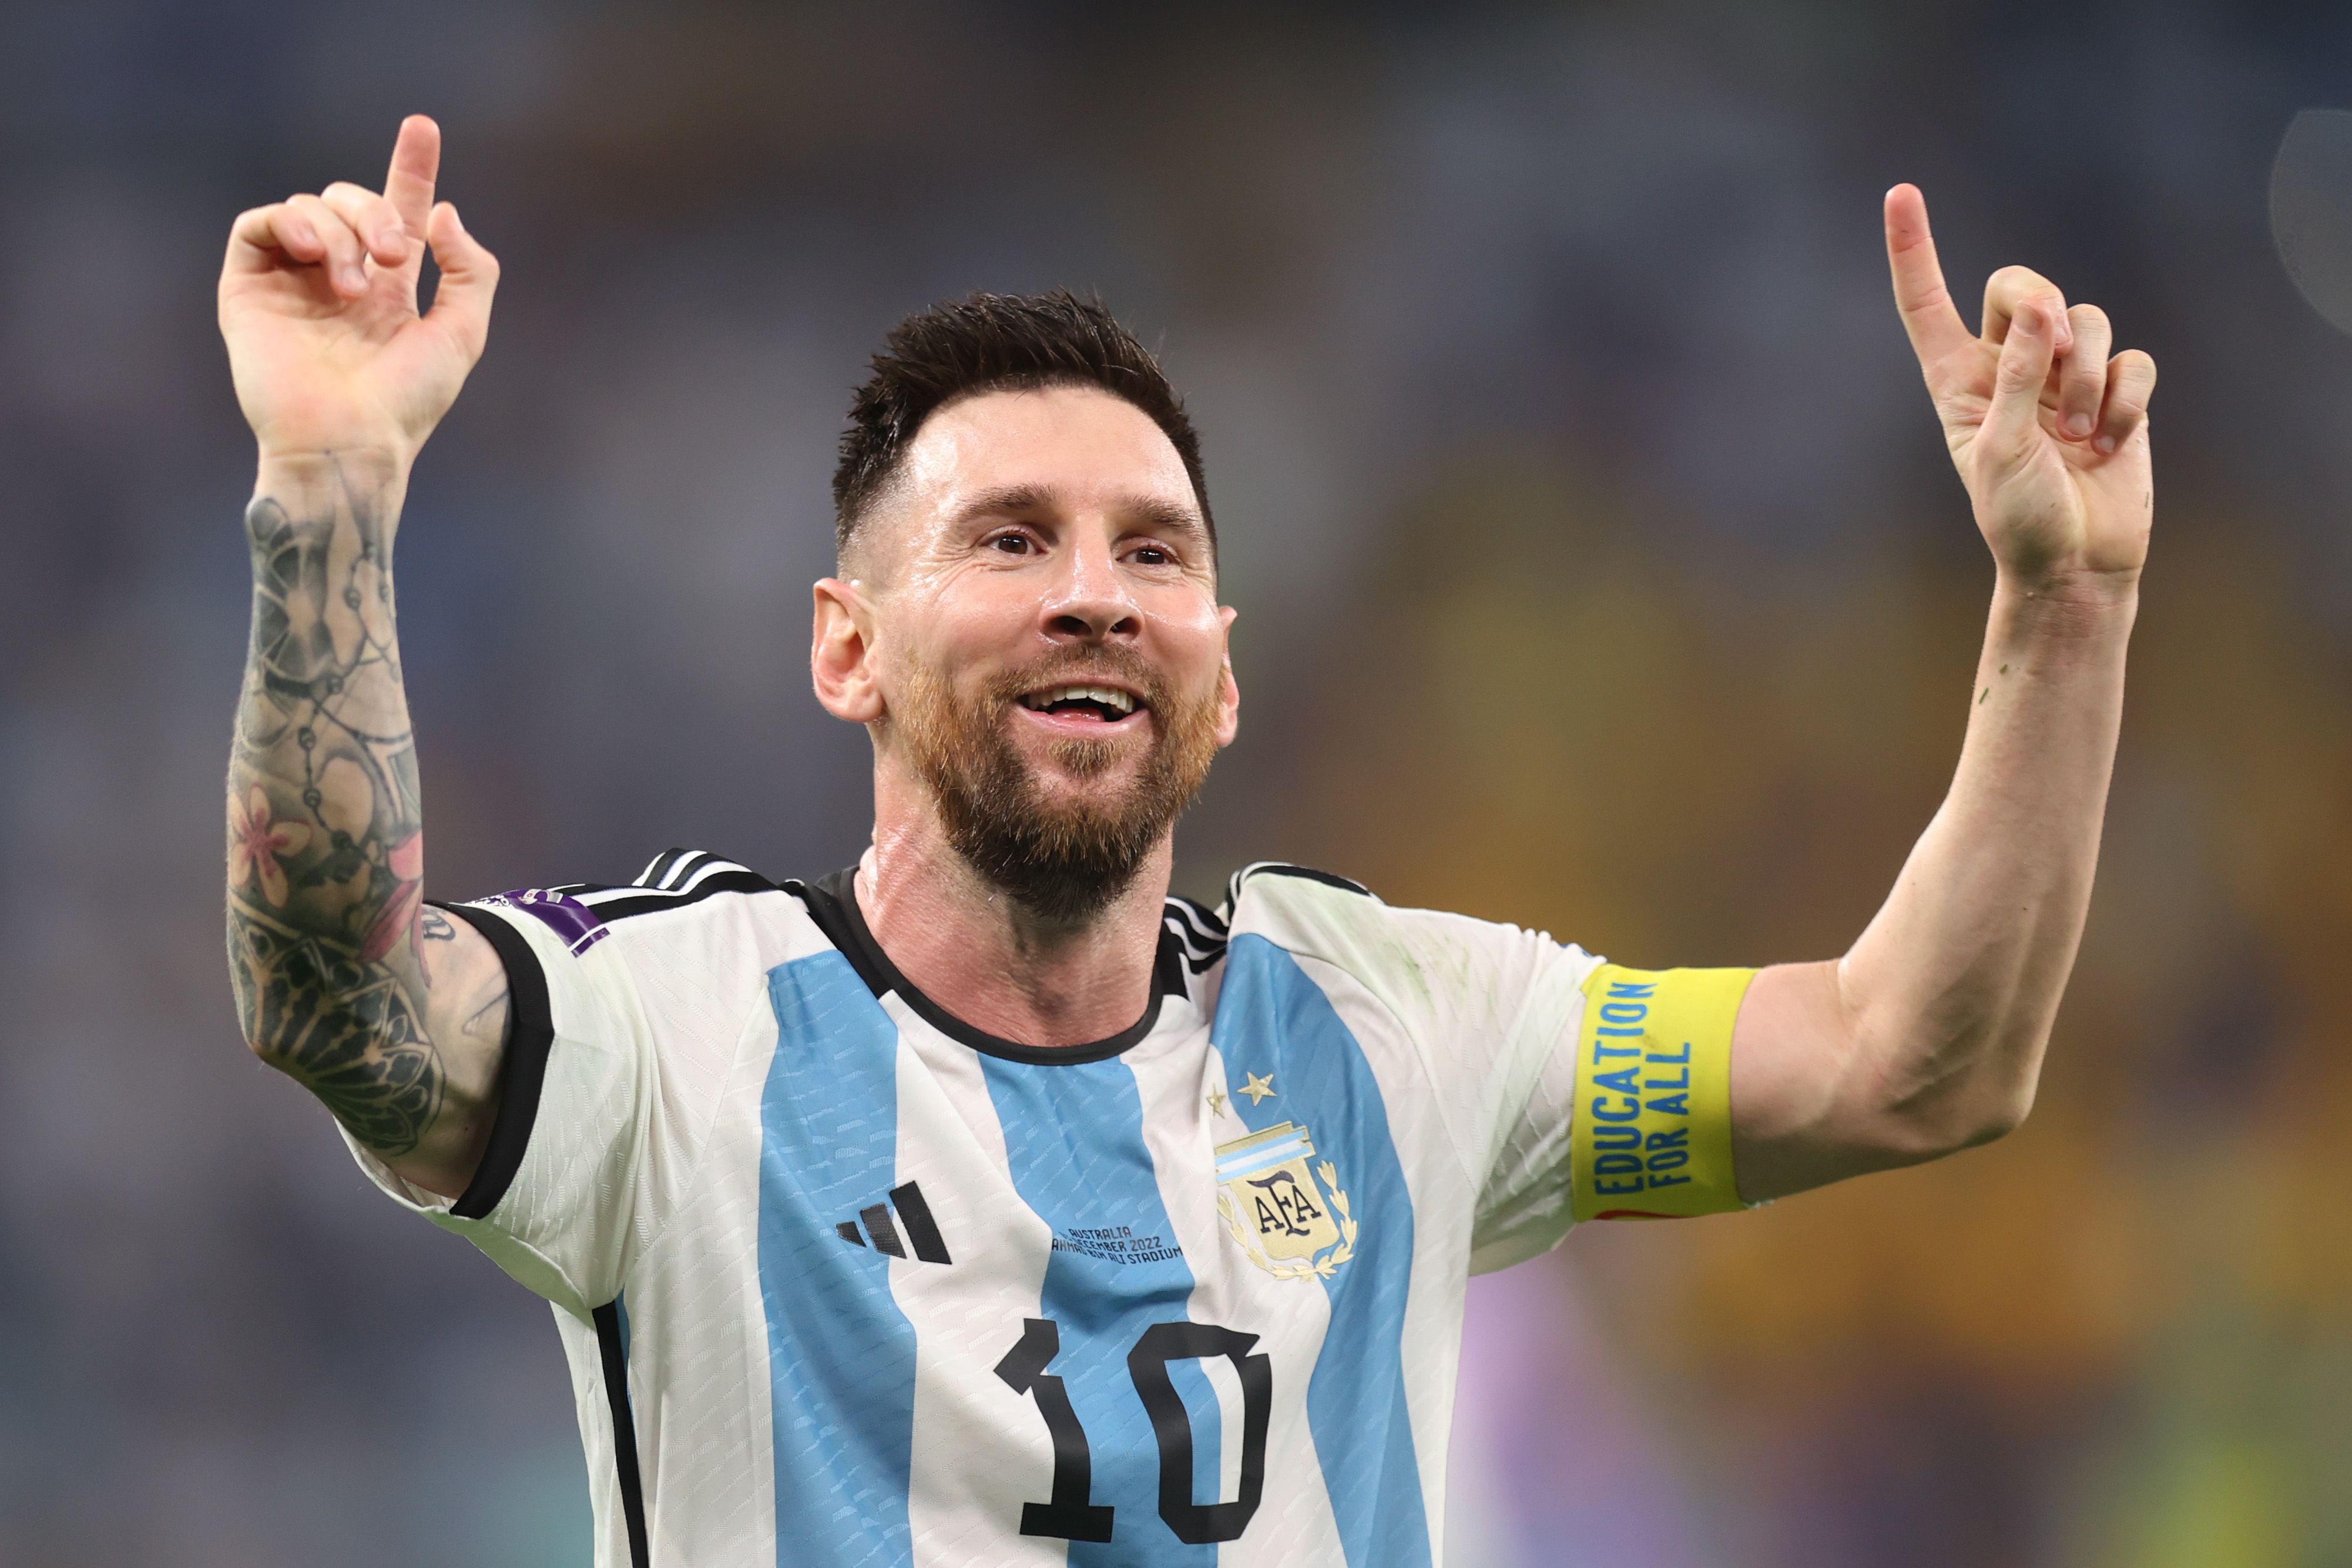 Argentina Lionel Messi Jersey